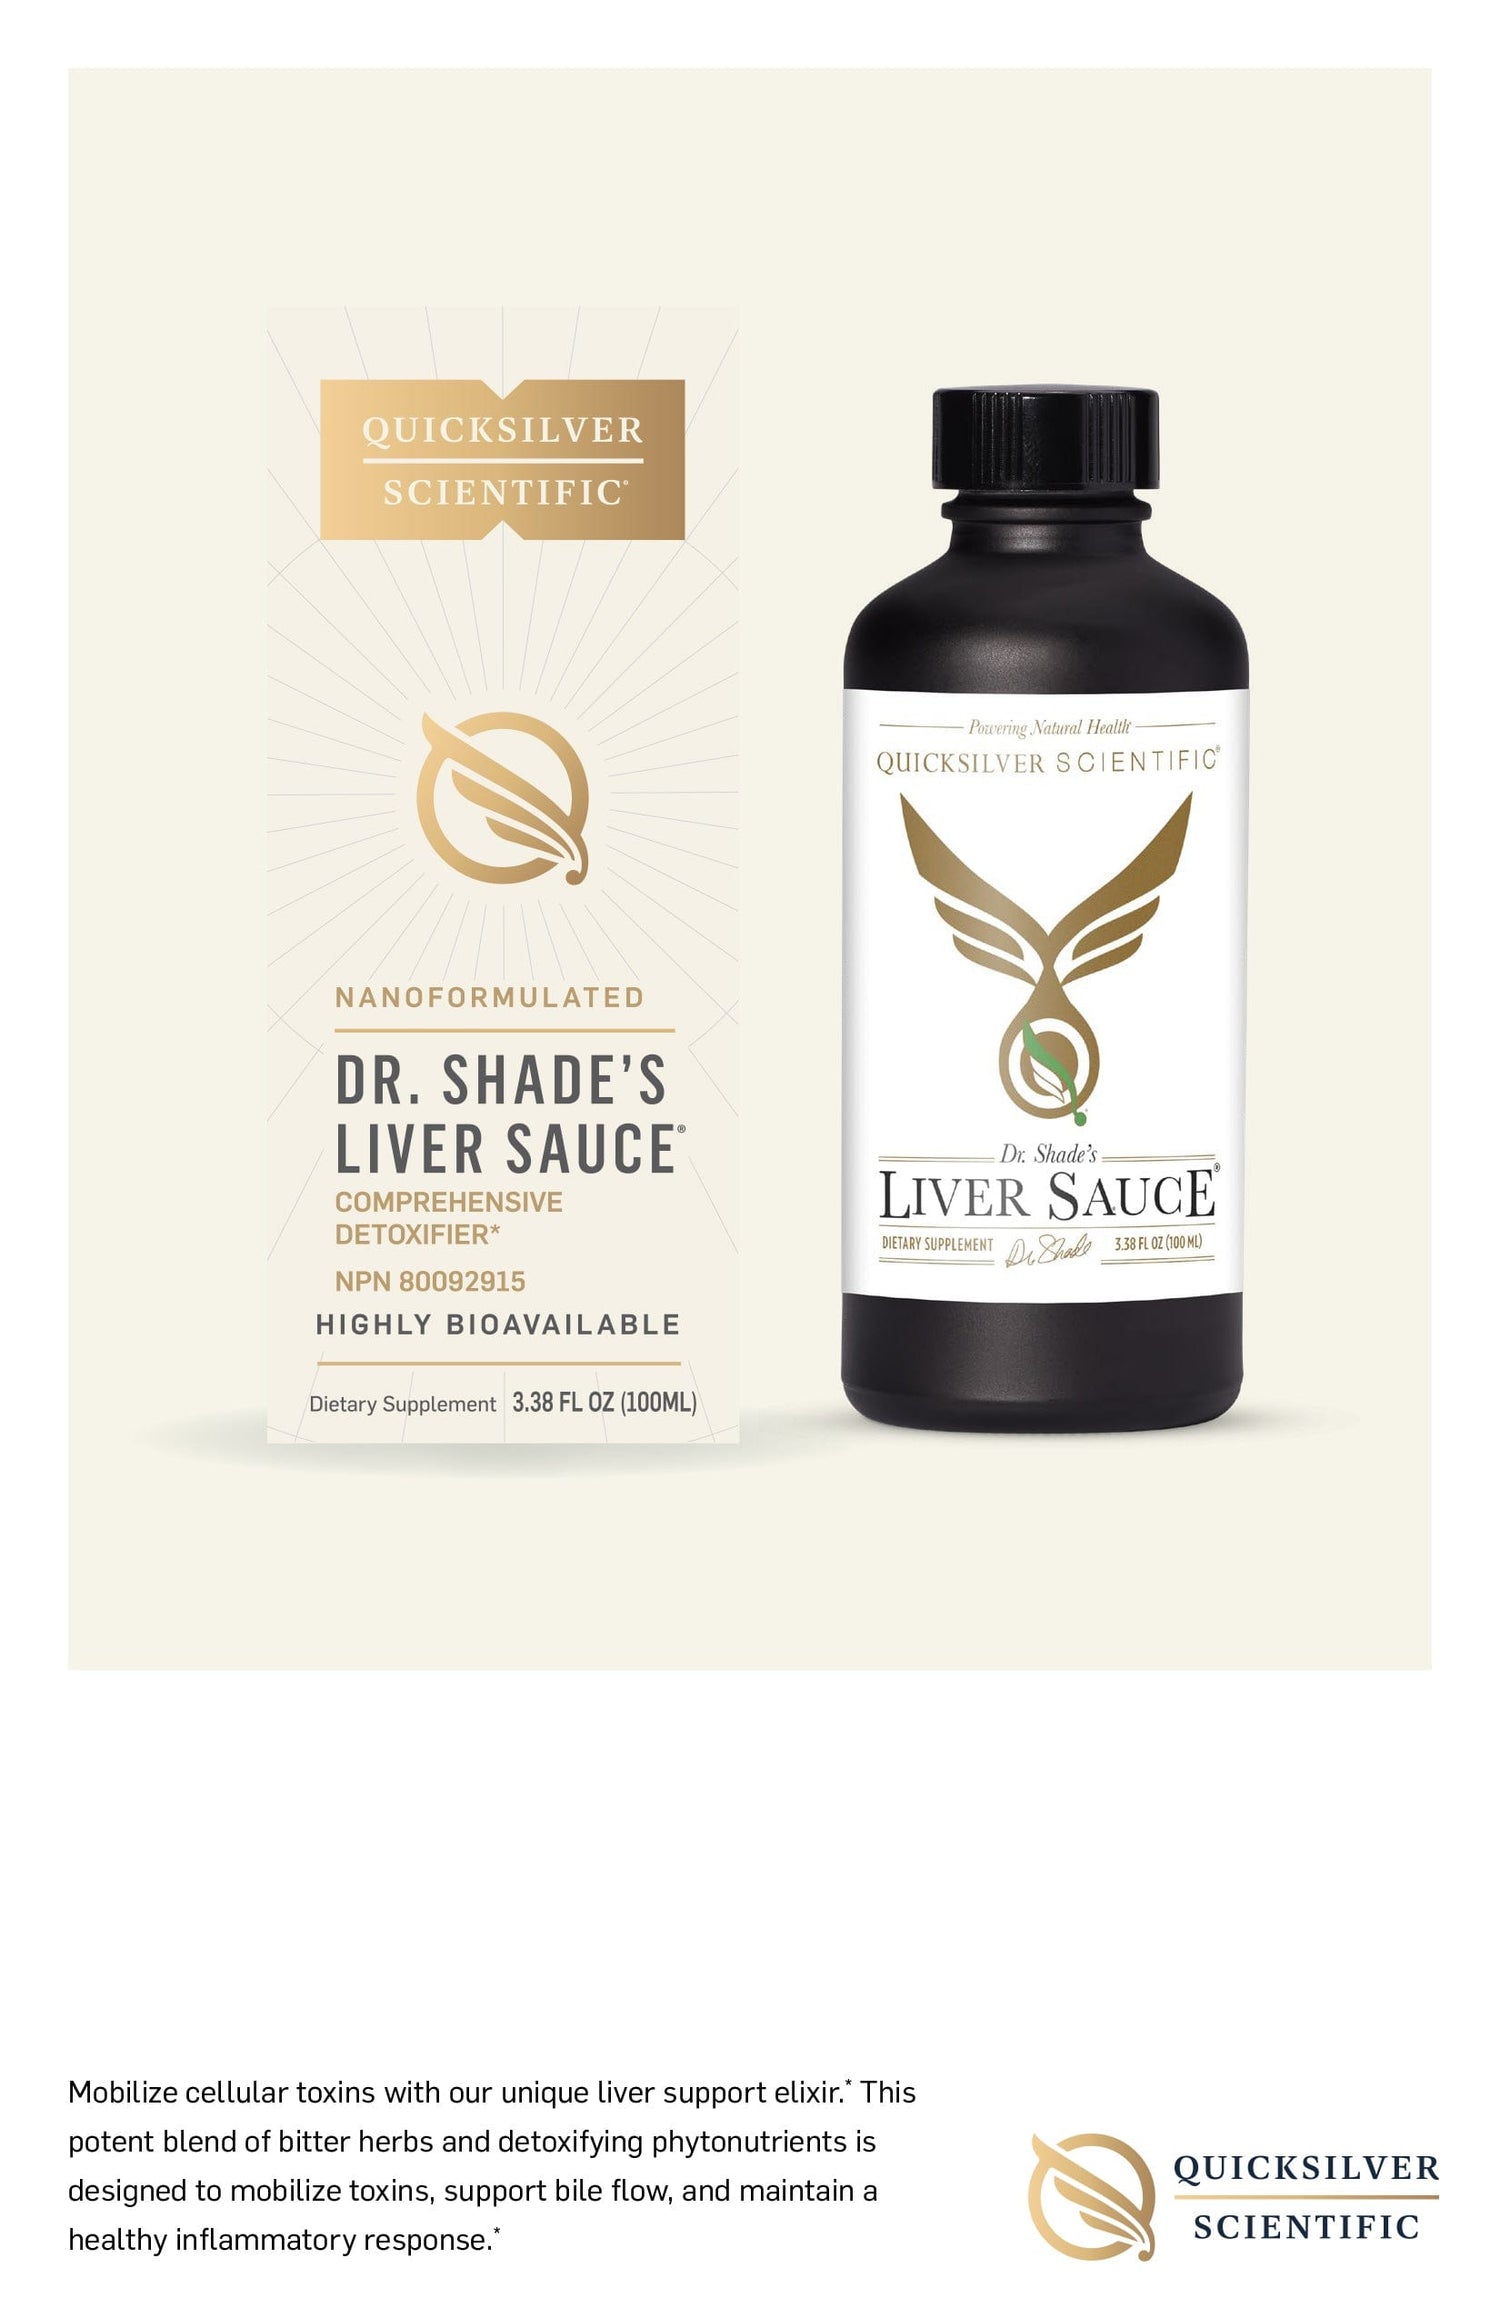 quicksilver scientific liver sauce info